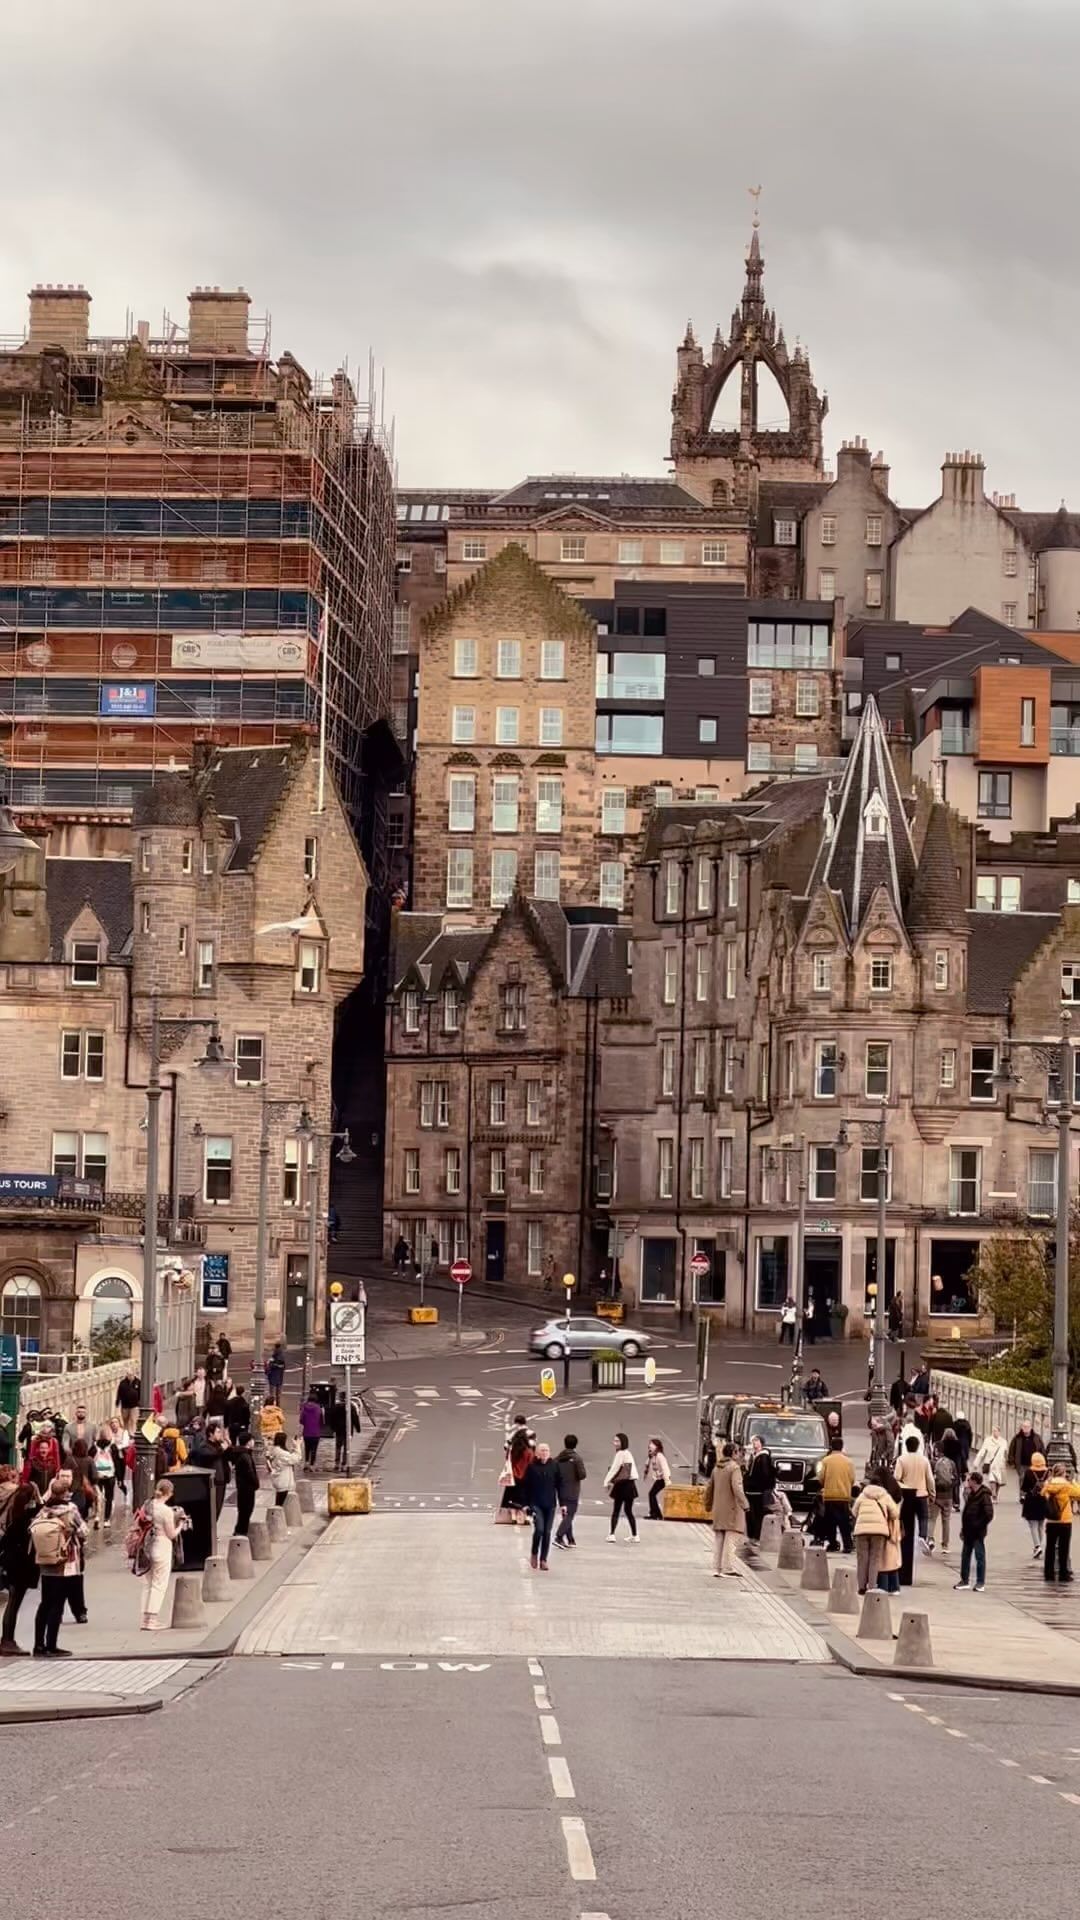 5-day trip to Edinburgh